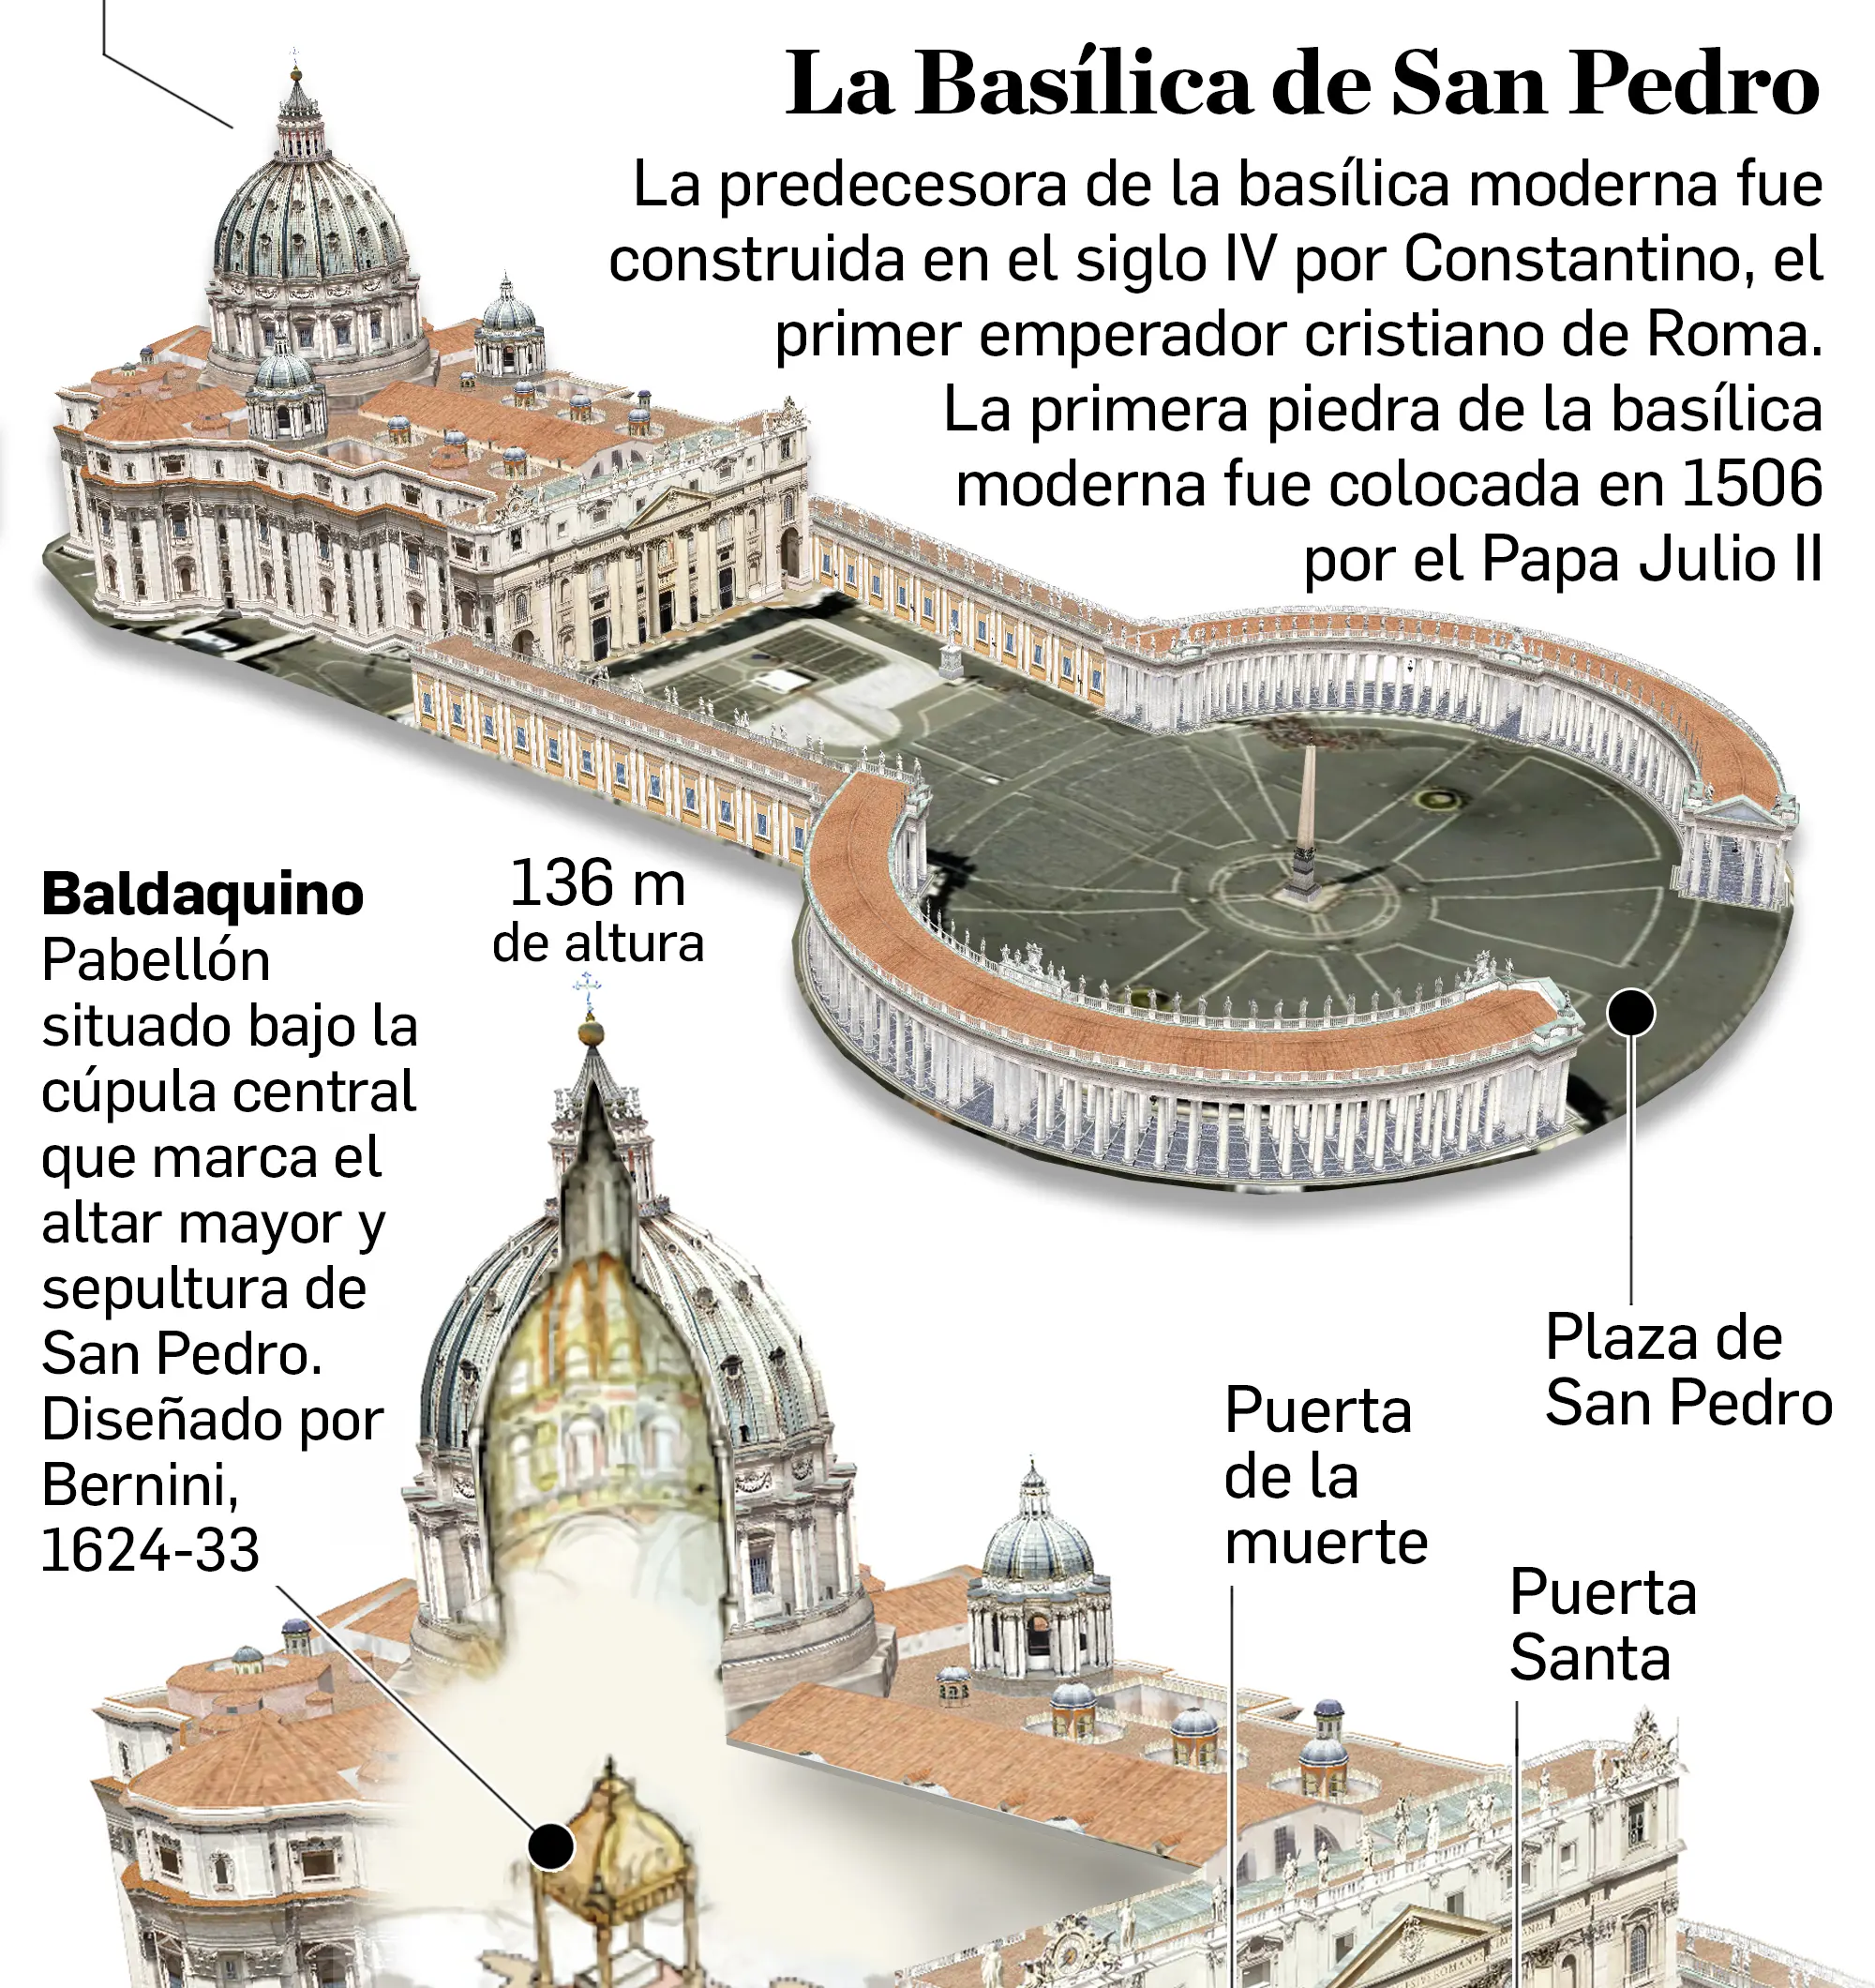 La Basílica de San Pedro